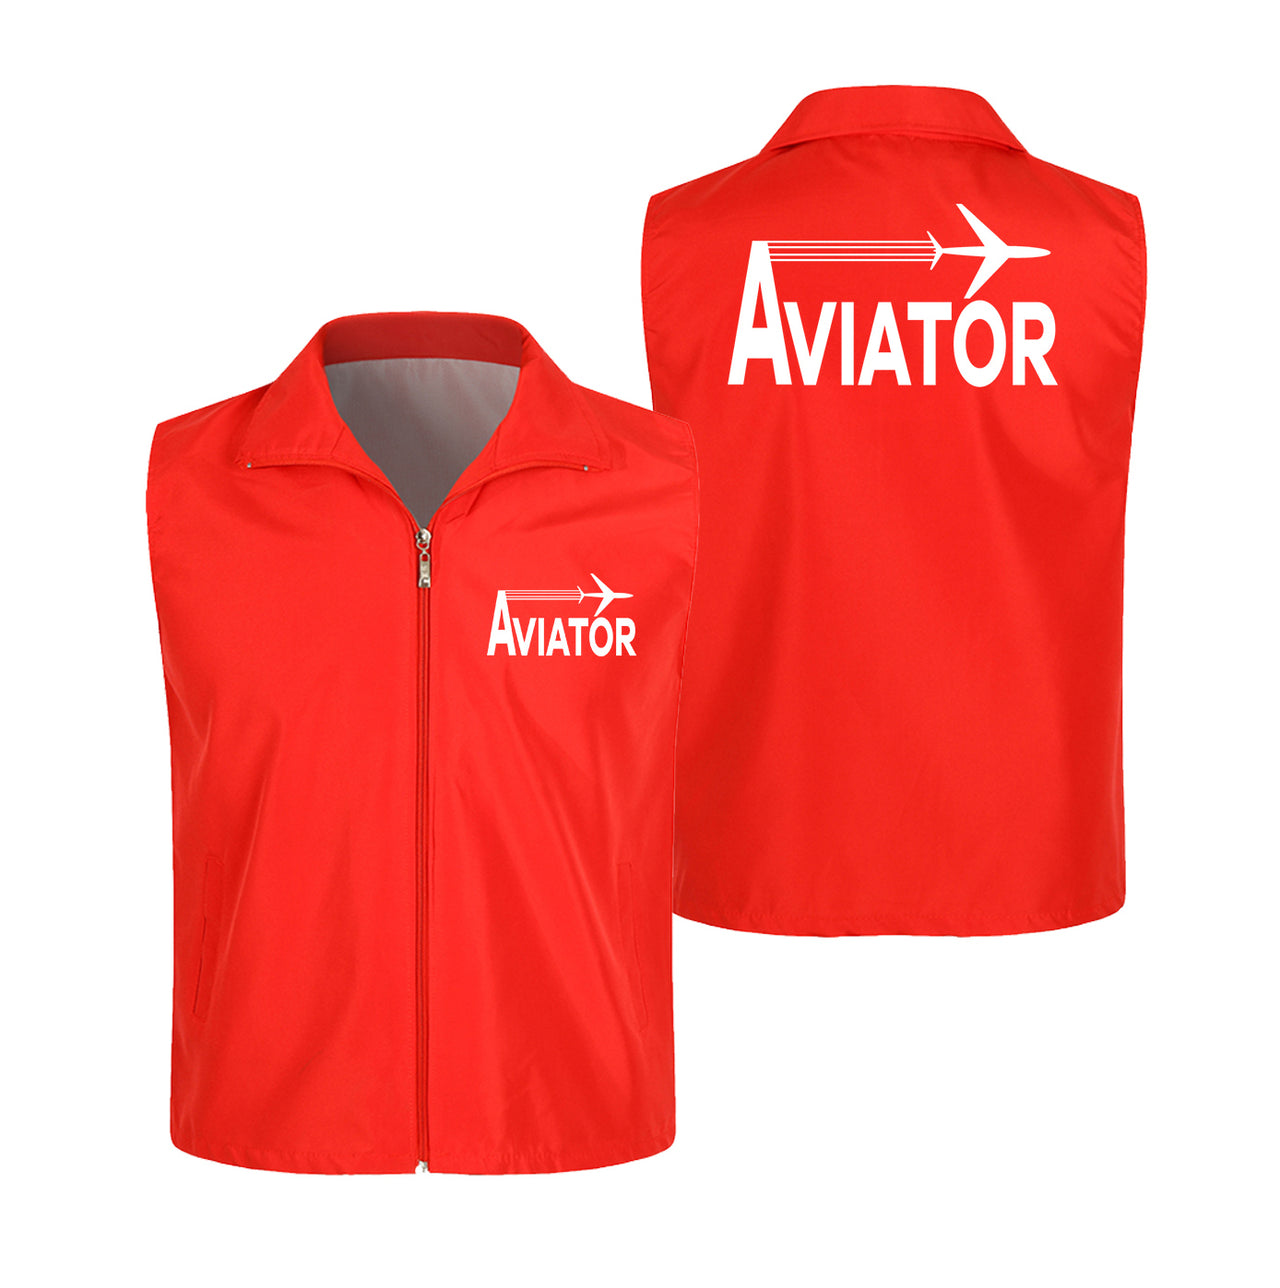 Aviator Designed Thin Style Vests